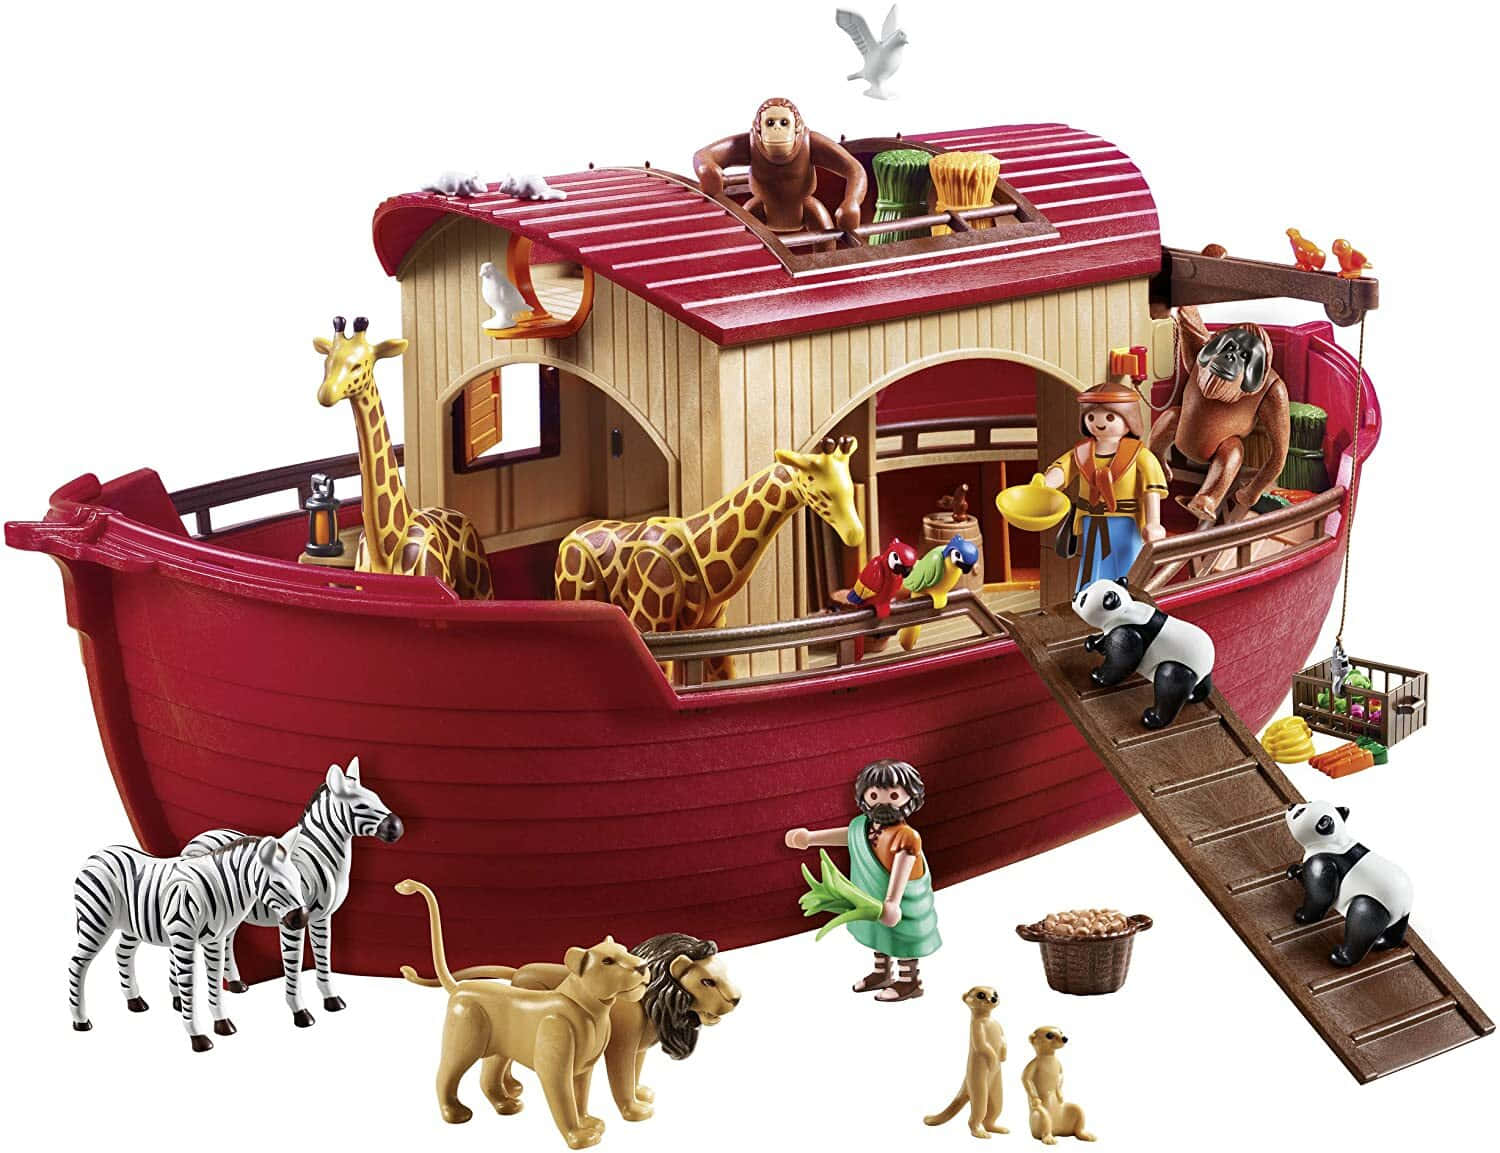 Noah's Ark, A Symbol of Hope